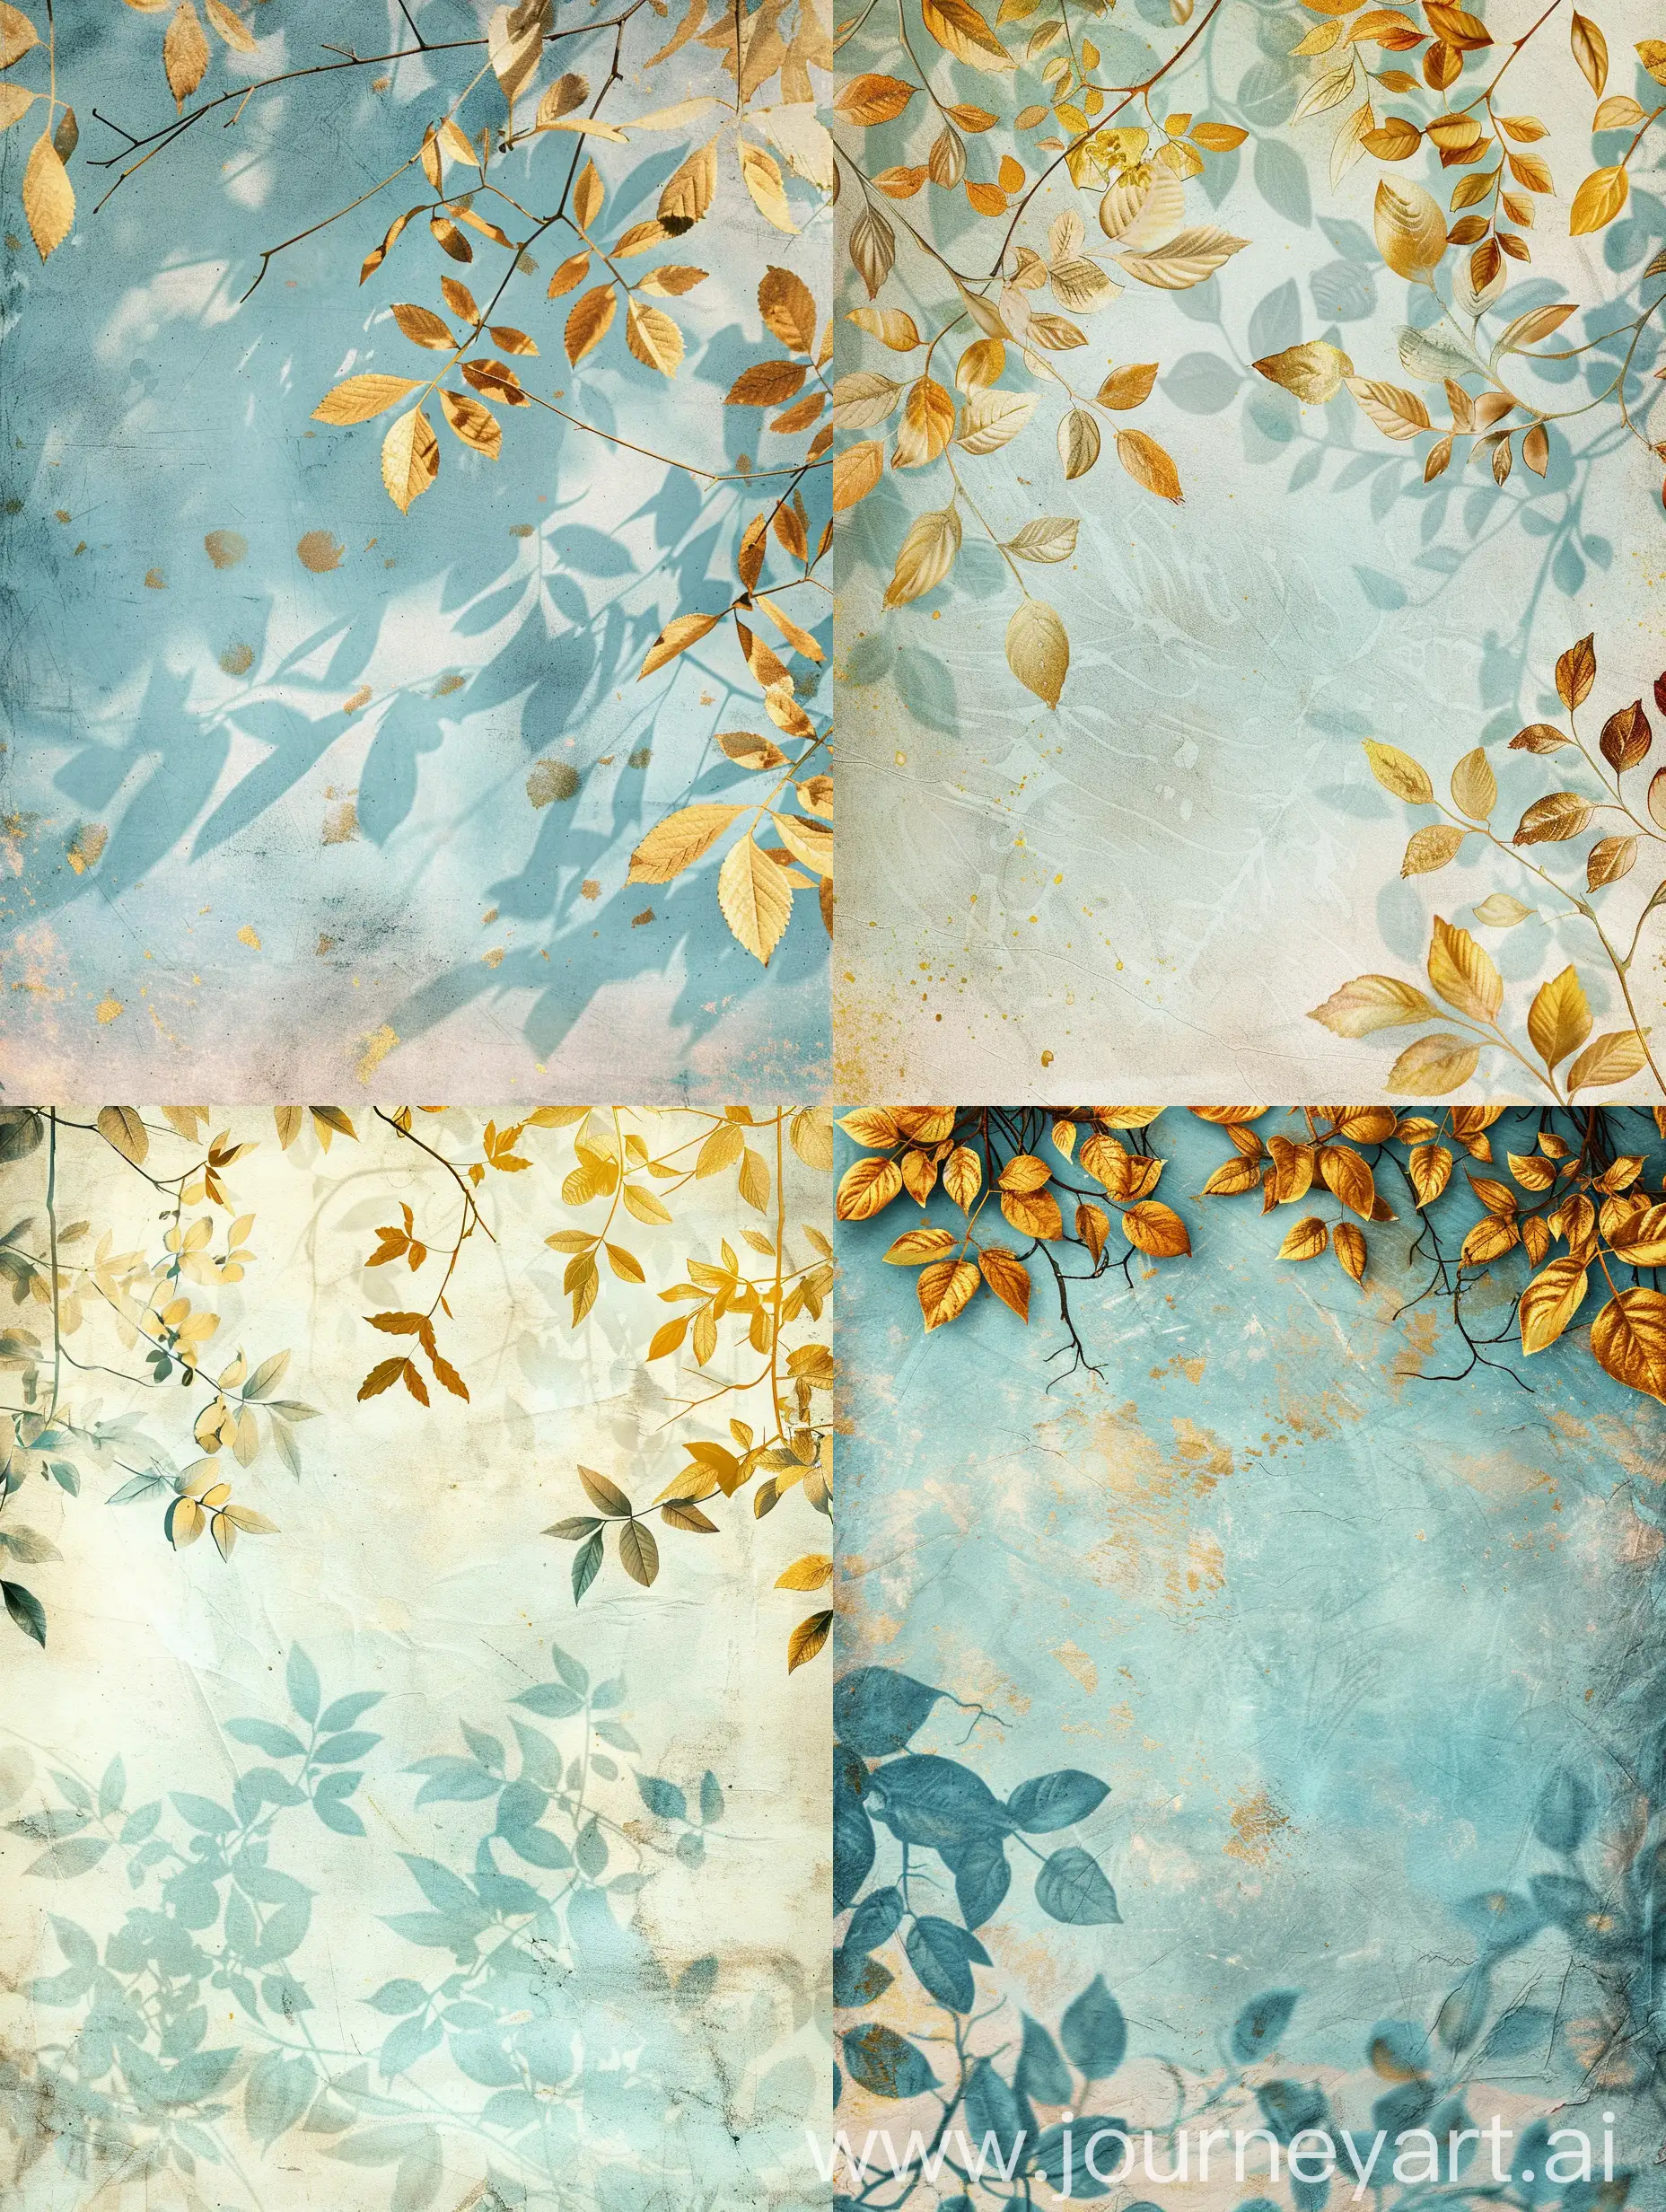 Floral, background, printable, beautiful, fantasy, light blue and golden leaves shadows, Journal, Digital paper, Junk Journal, Scrapbook Paper in Floral Vintage Style